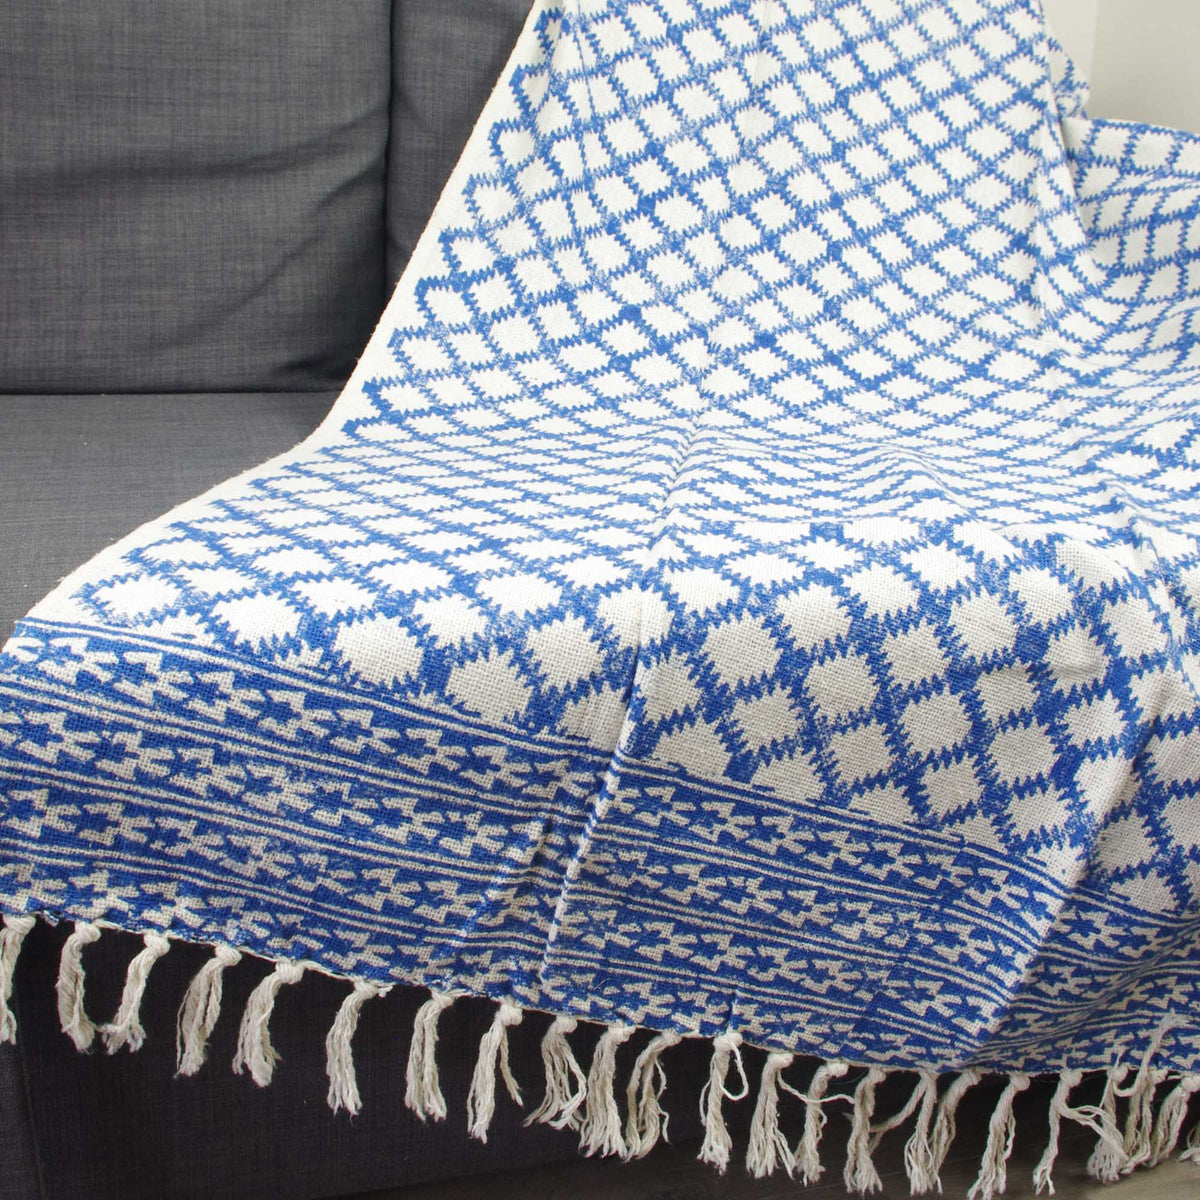 Block Printed Handloom Cotton Sofa Throw With Tassels - Blue White Geometric